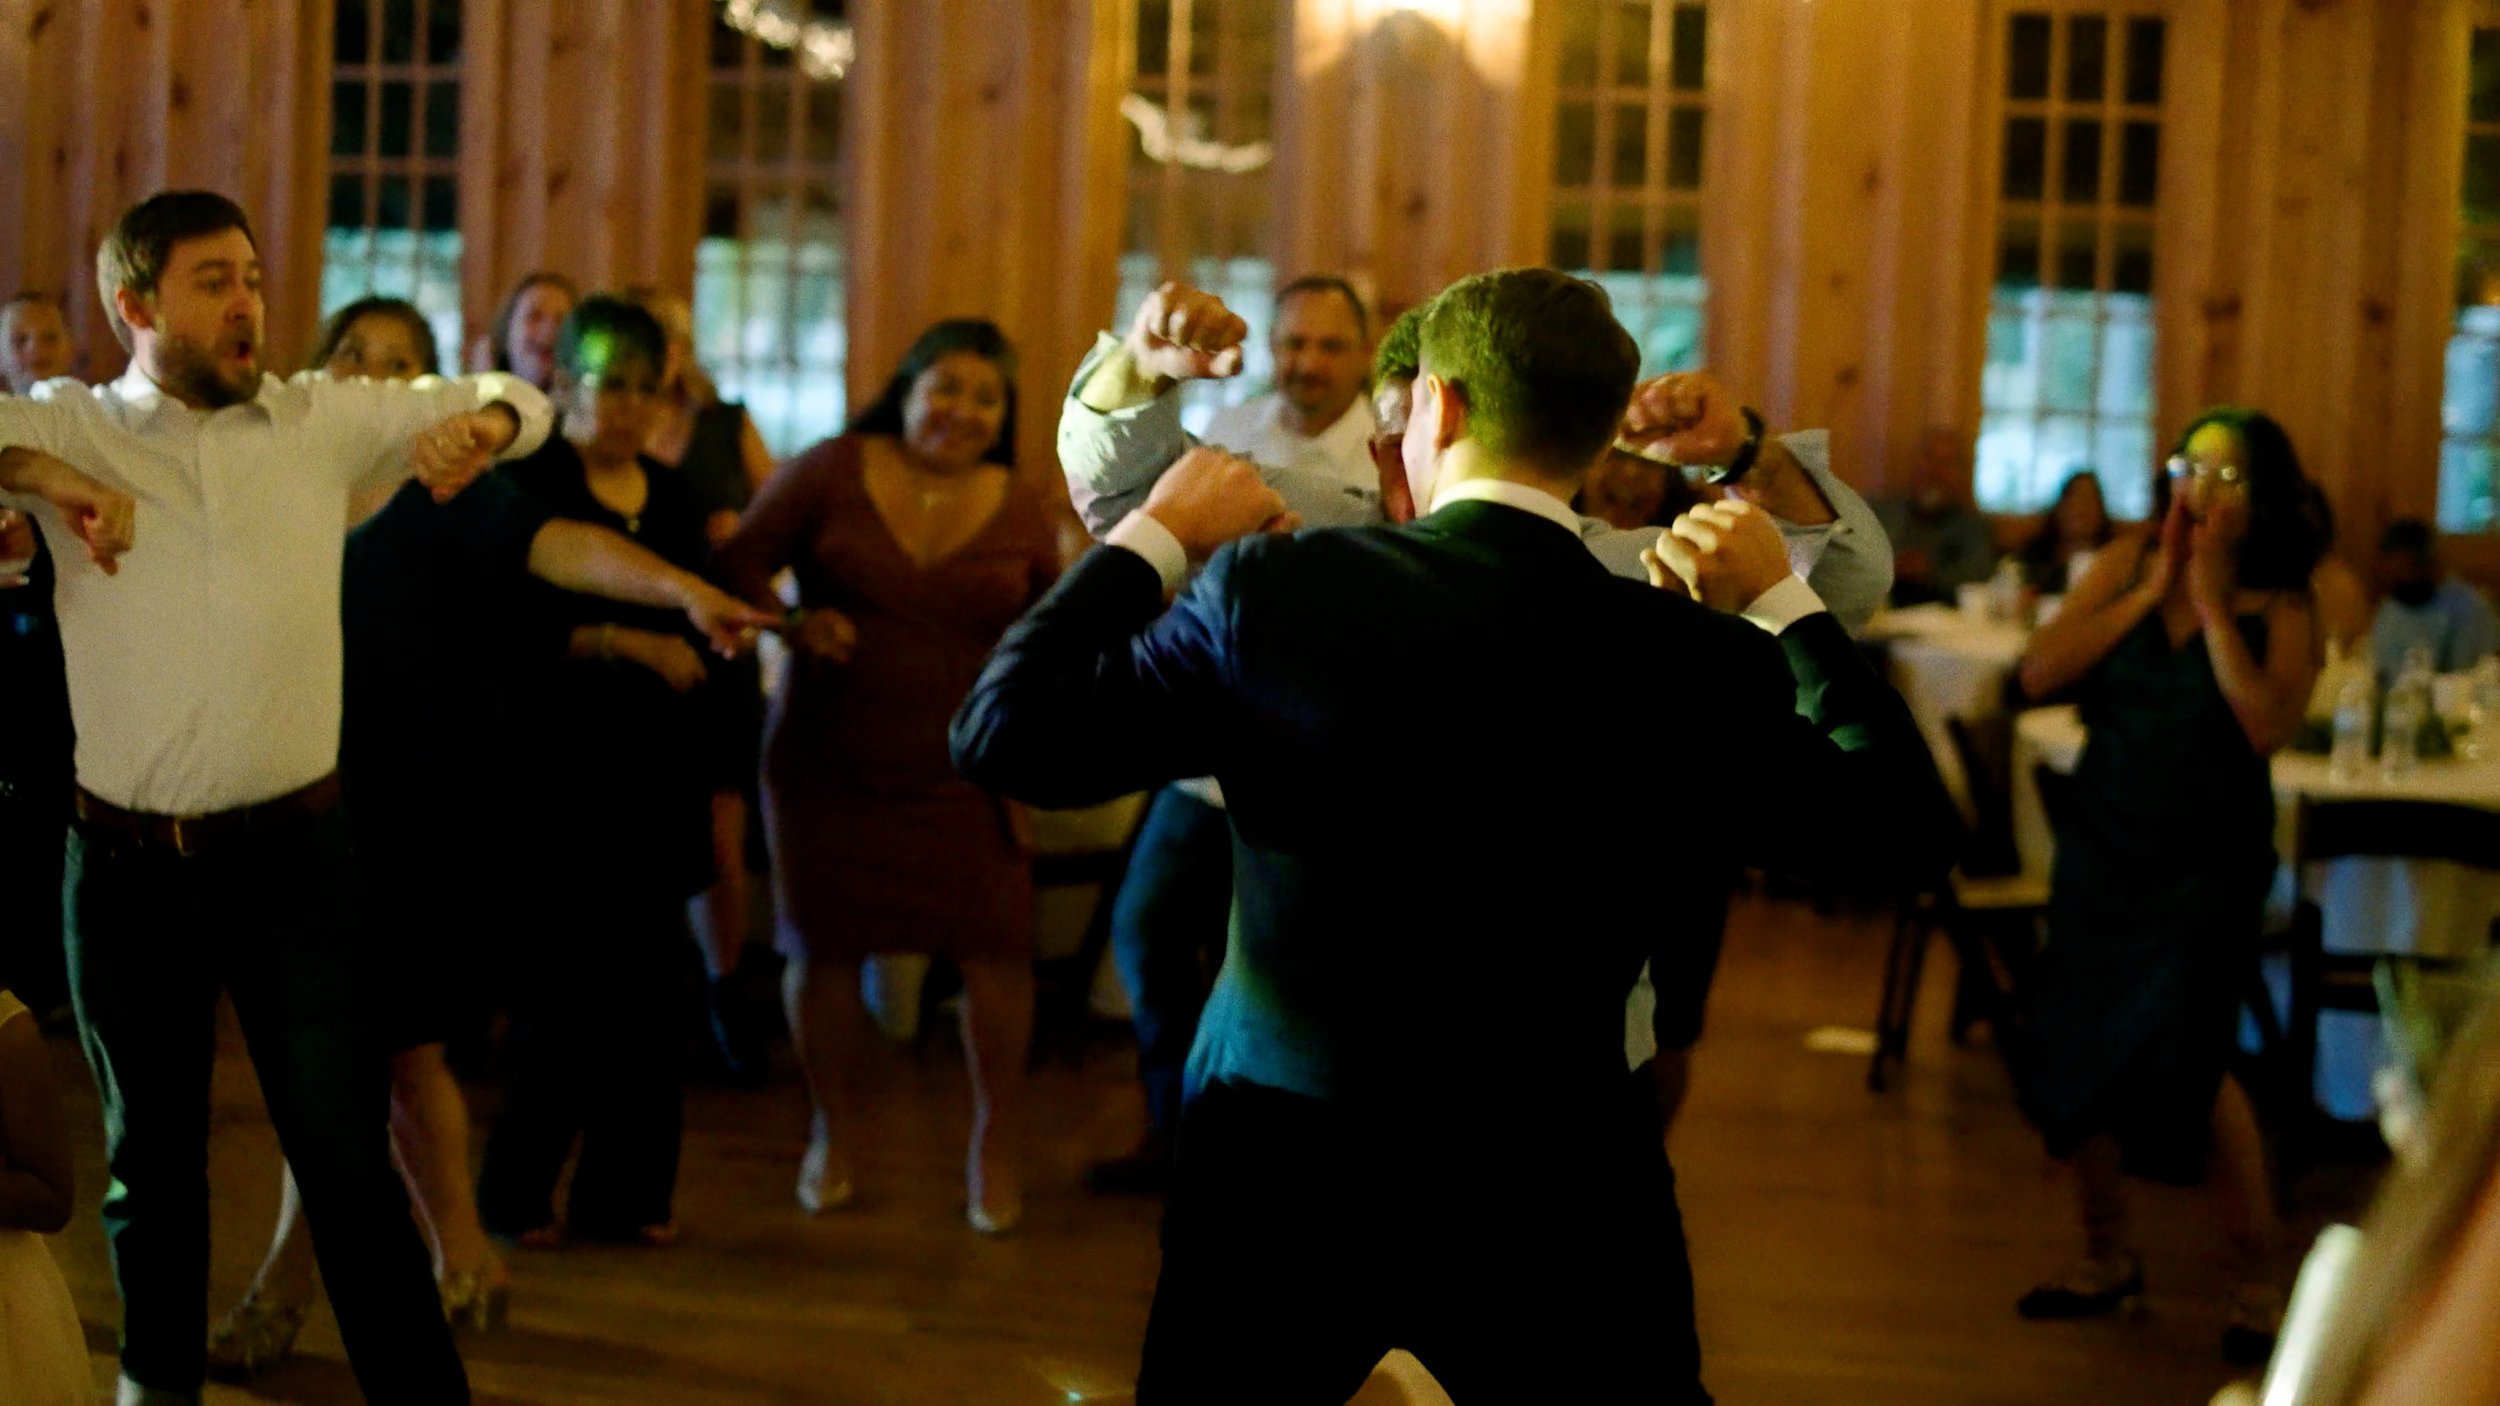 groom dances with guest on dance floor at wedding reception